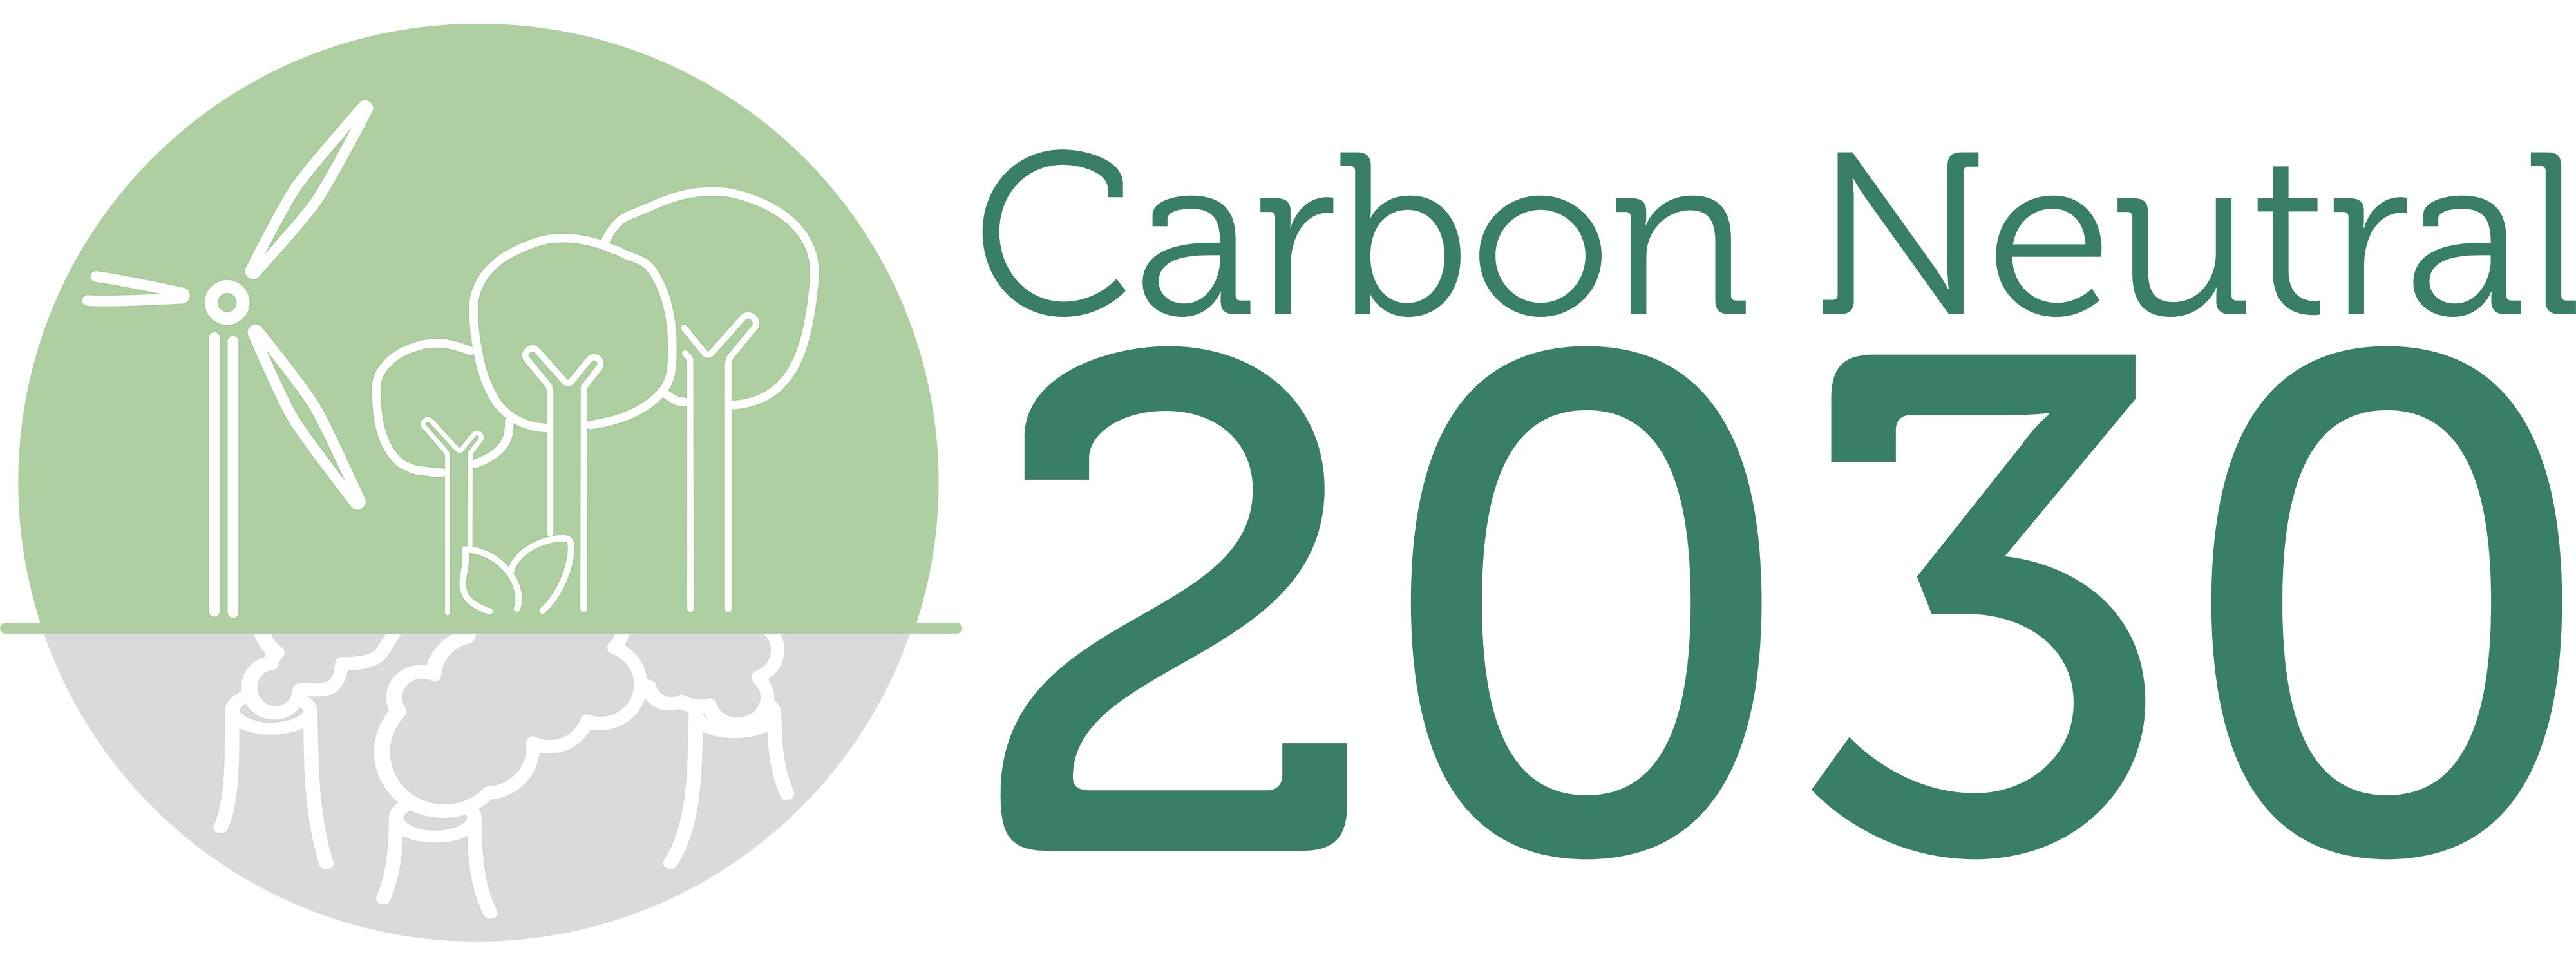 Carbon Neutral 2030 logo